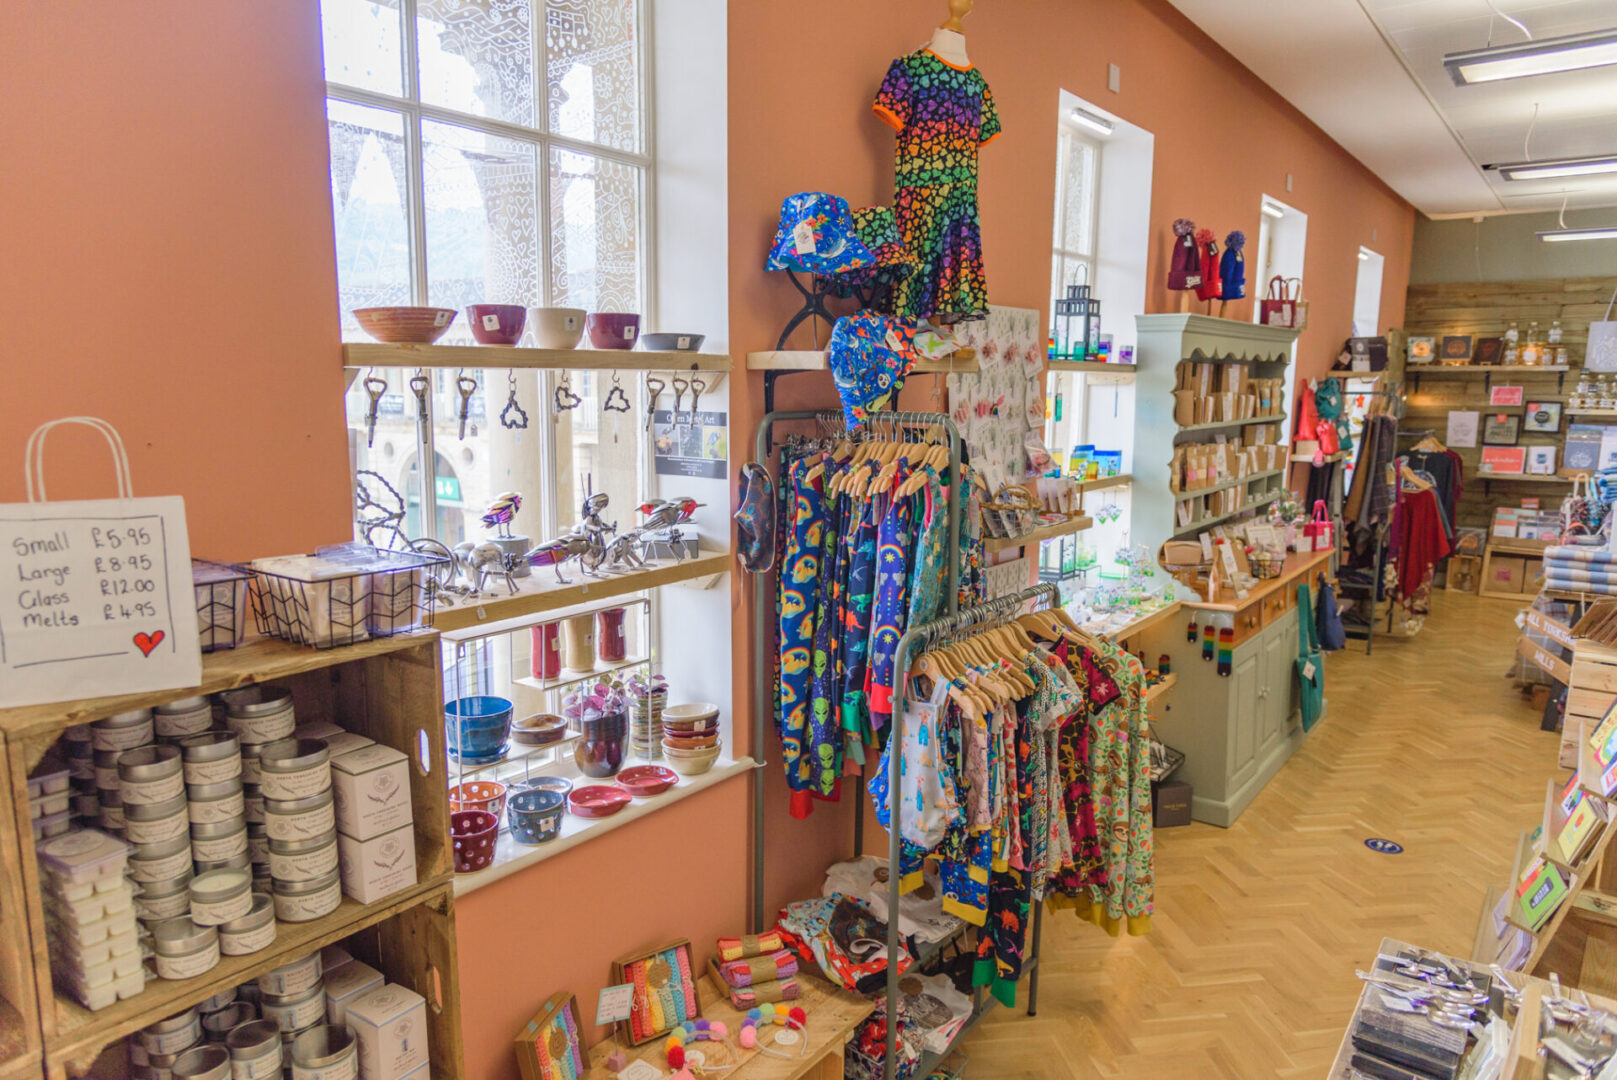 The Handmade Gift Shop